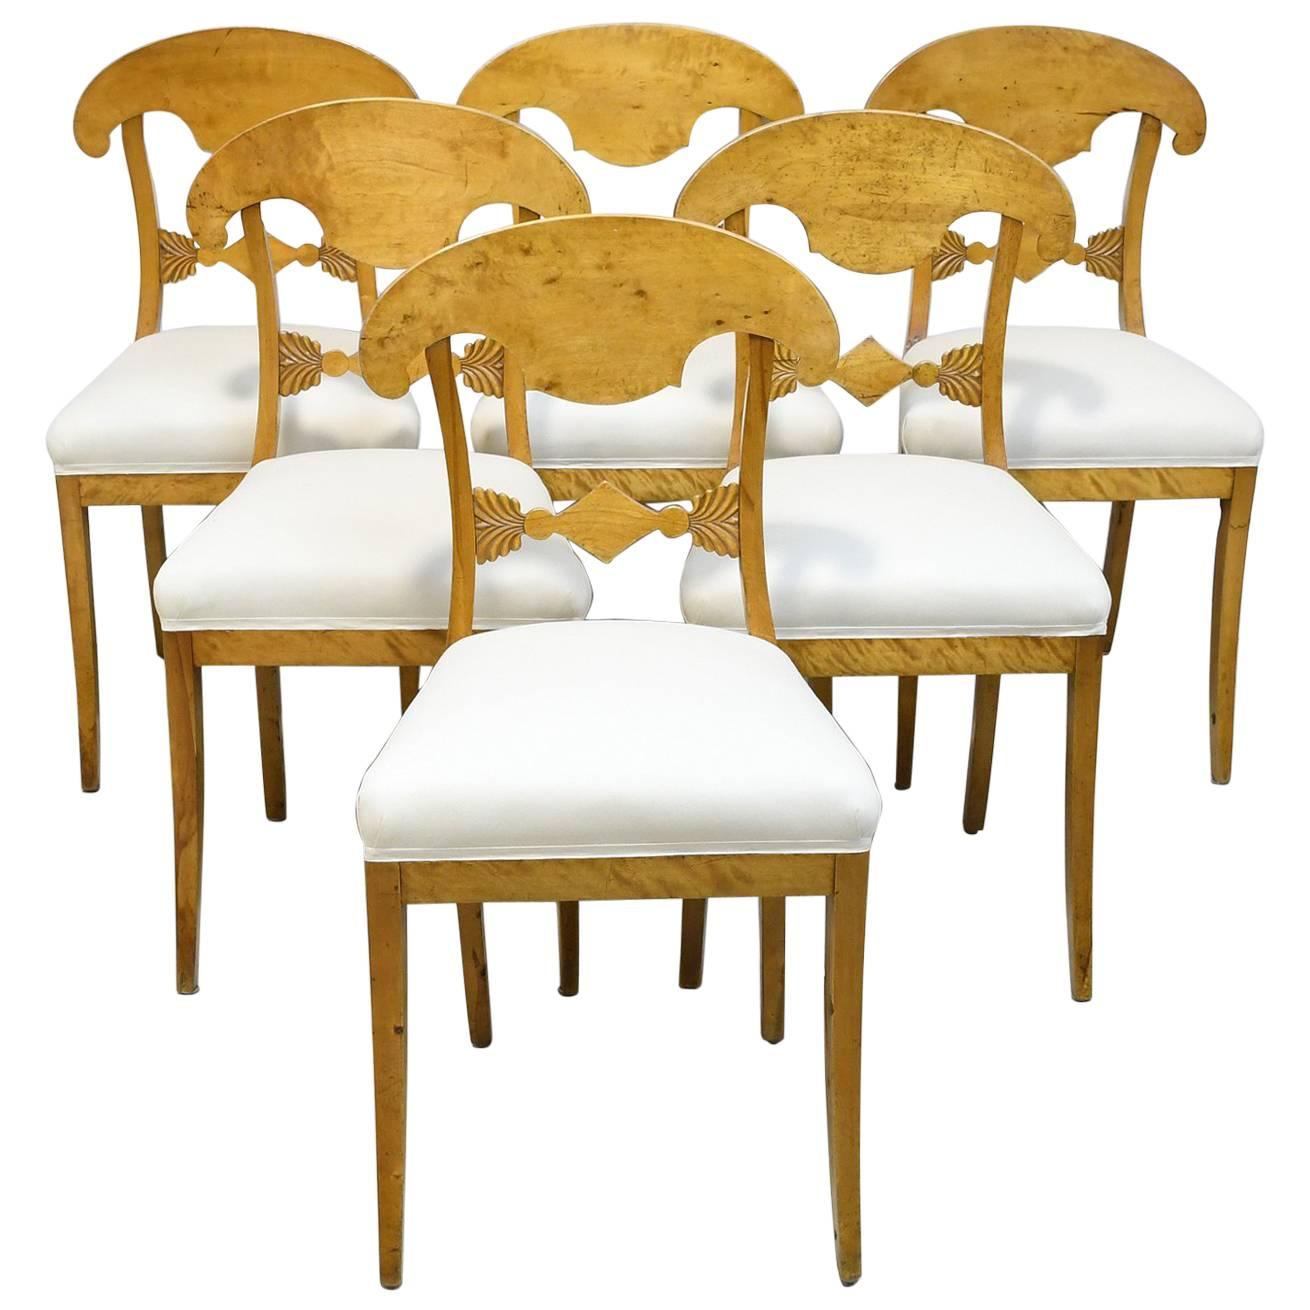 Set of Six Swedish Biedermeier Chairs with Upholstered Seats, circa 1820